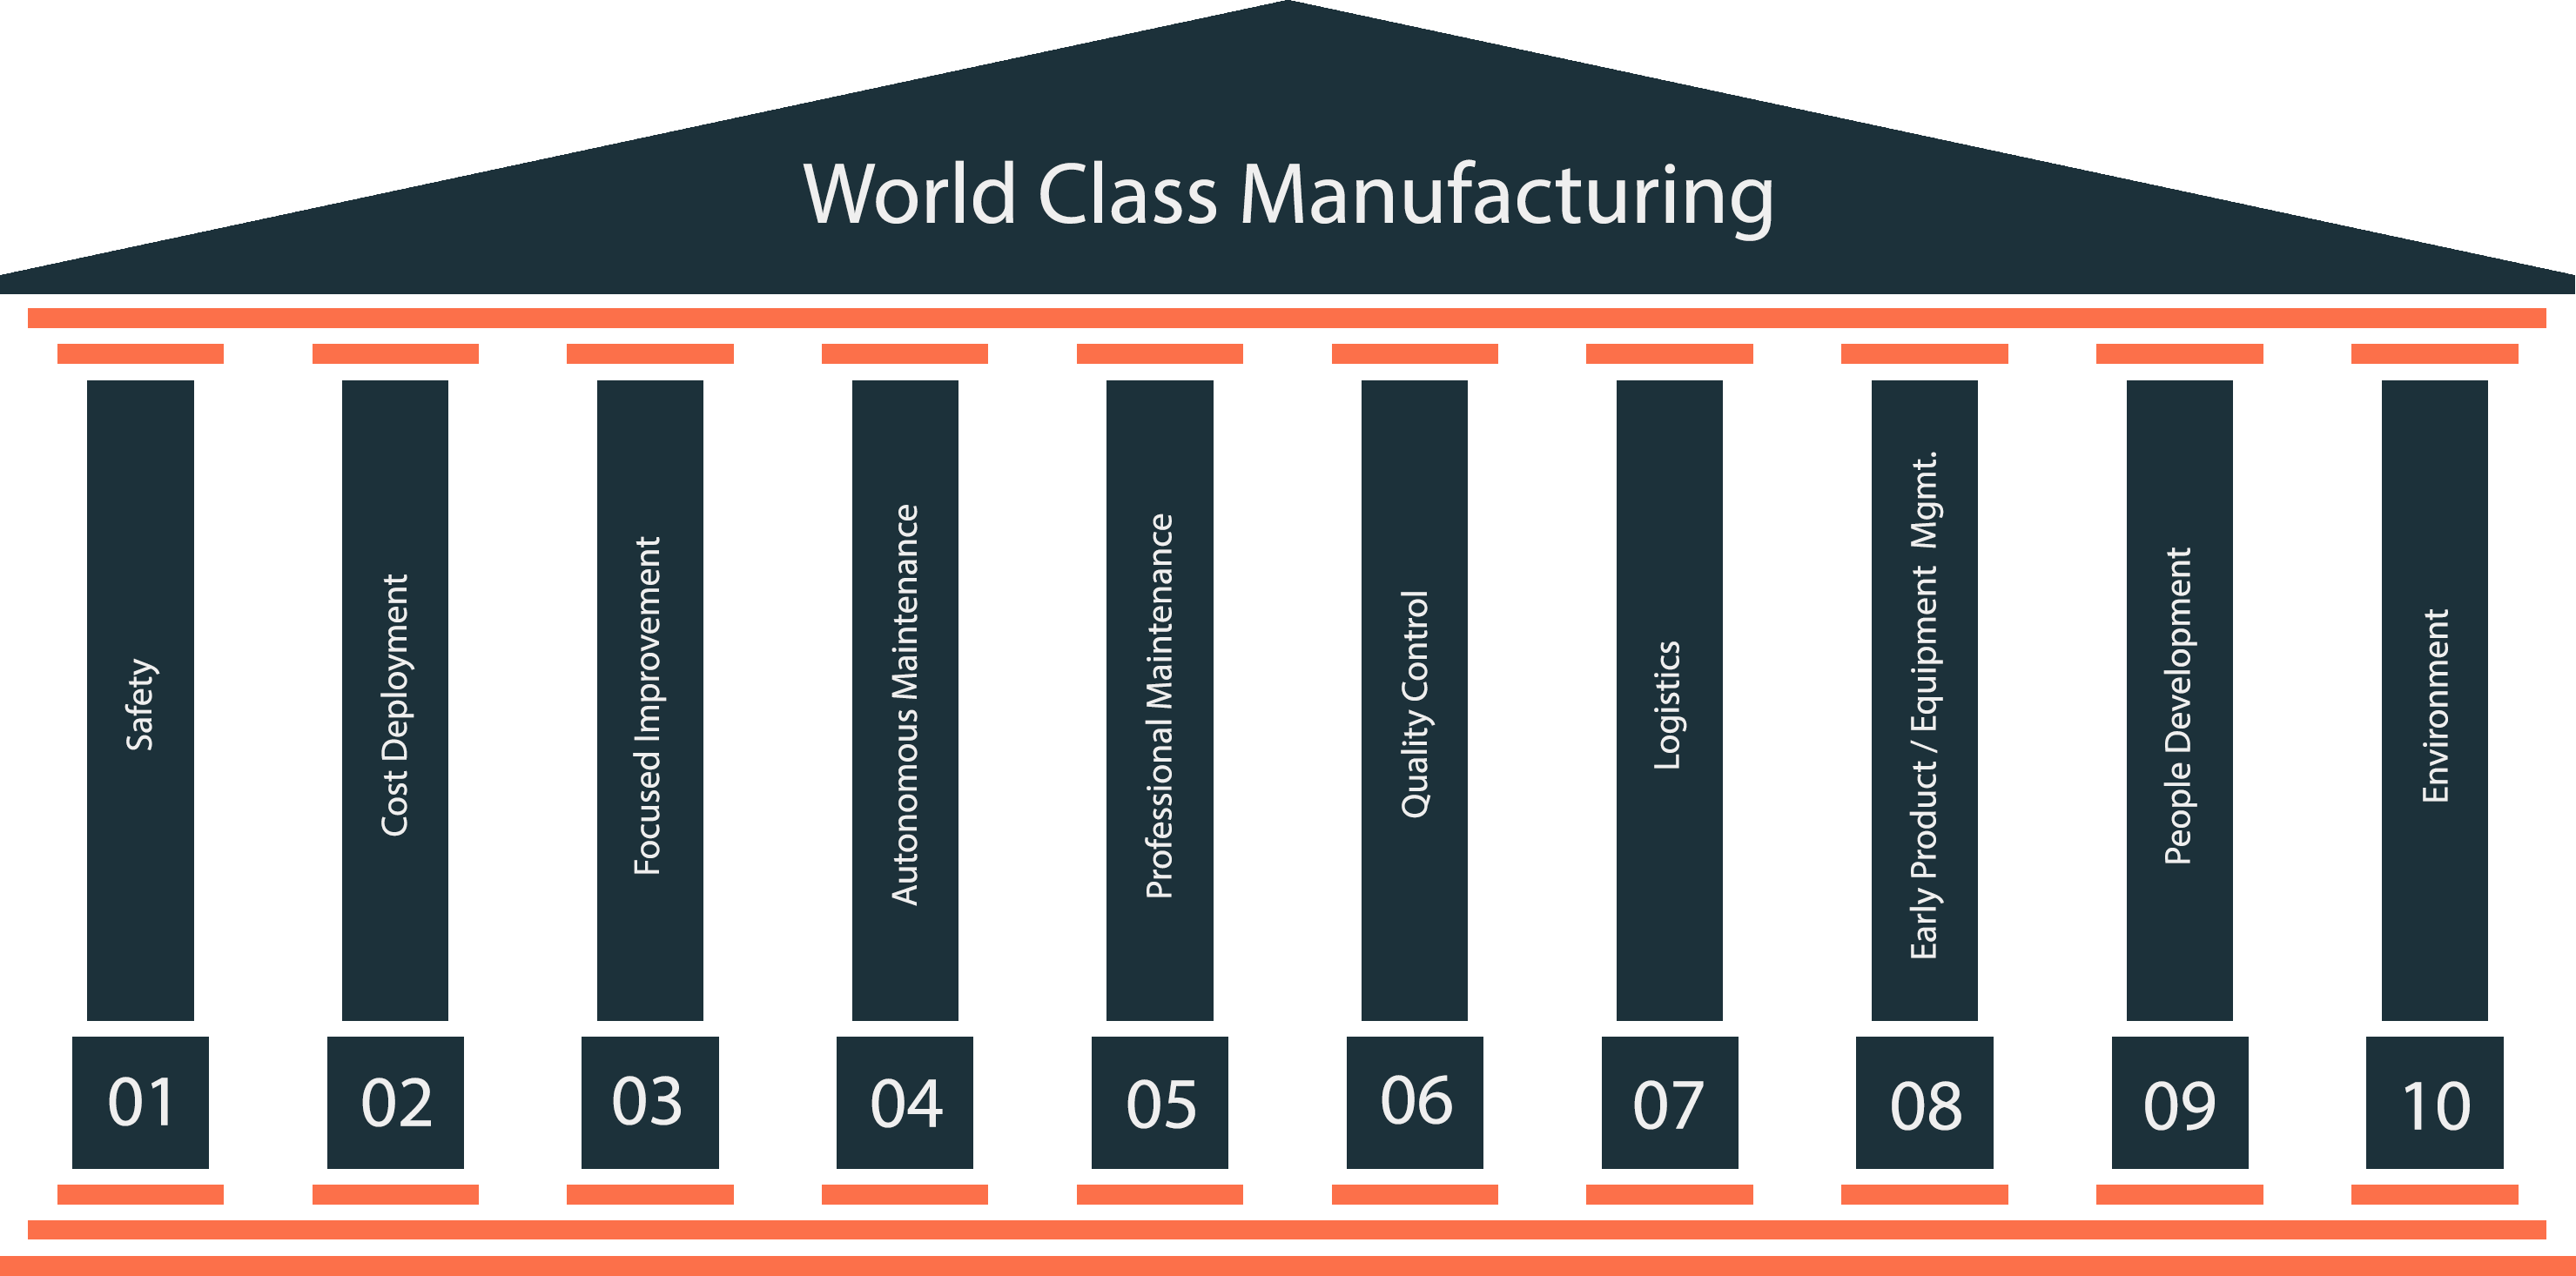 Worldwide manufacturing